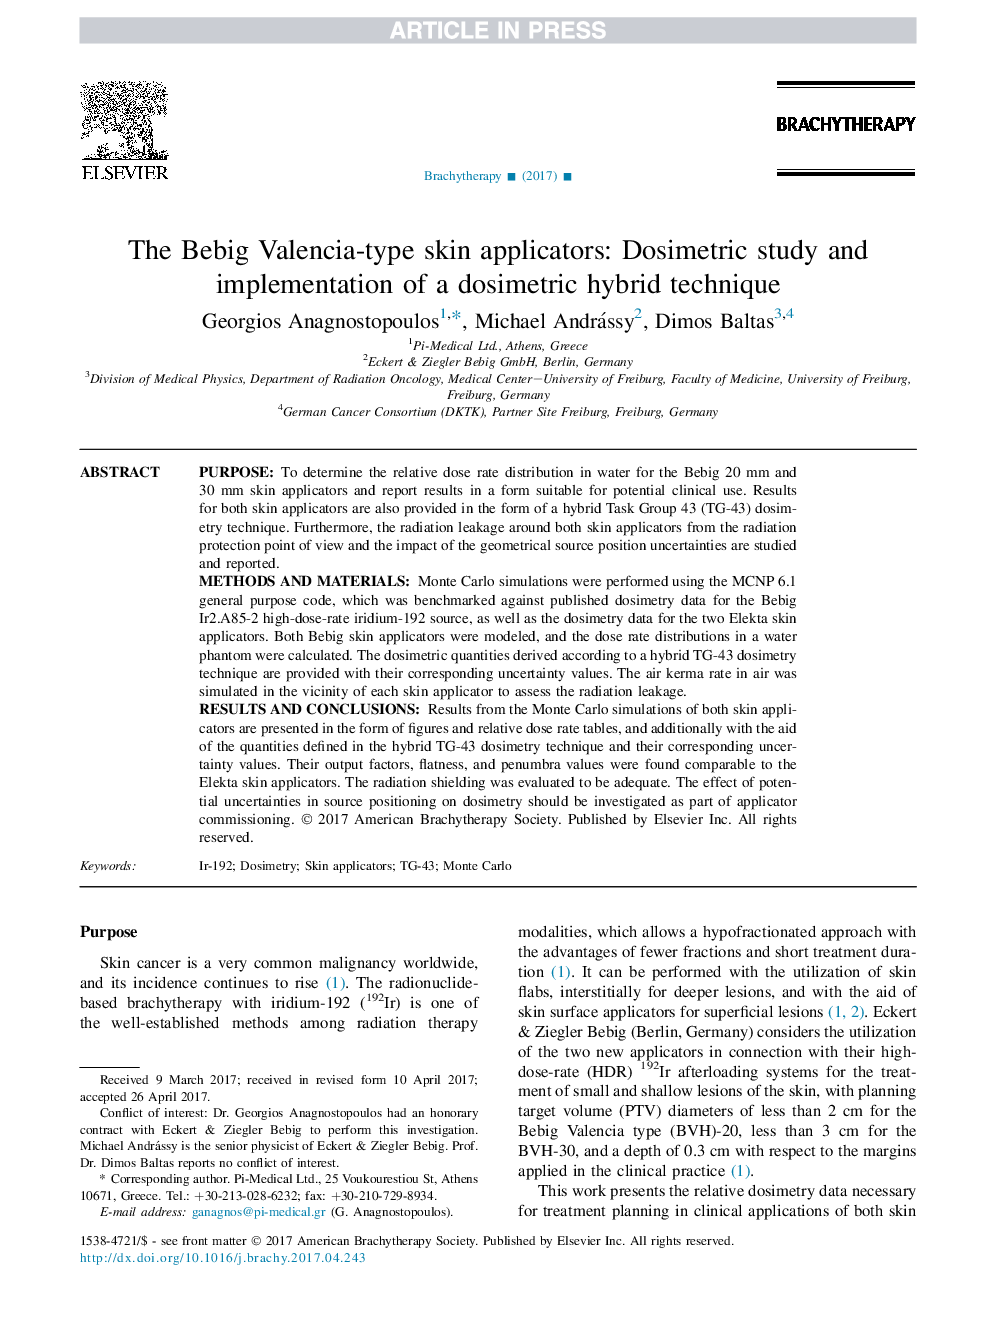 The Bebig Valencia-type skin applicators: Dosimetric study and implementation of a dosimetric hybrid technique